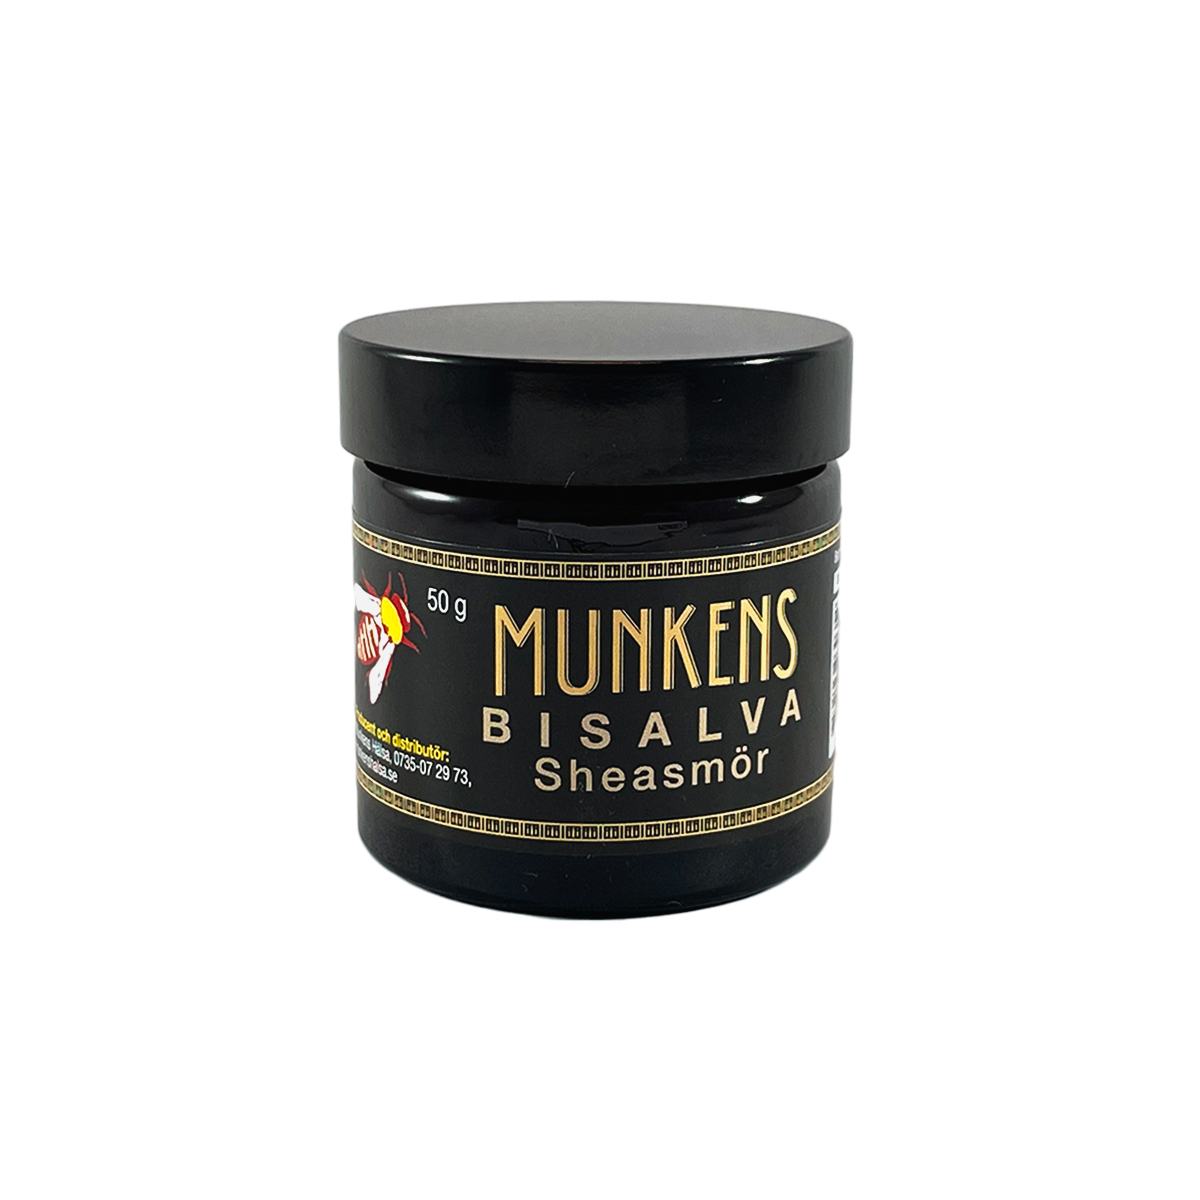 Munkens Bisalva Sheasmör – 50 g